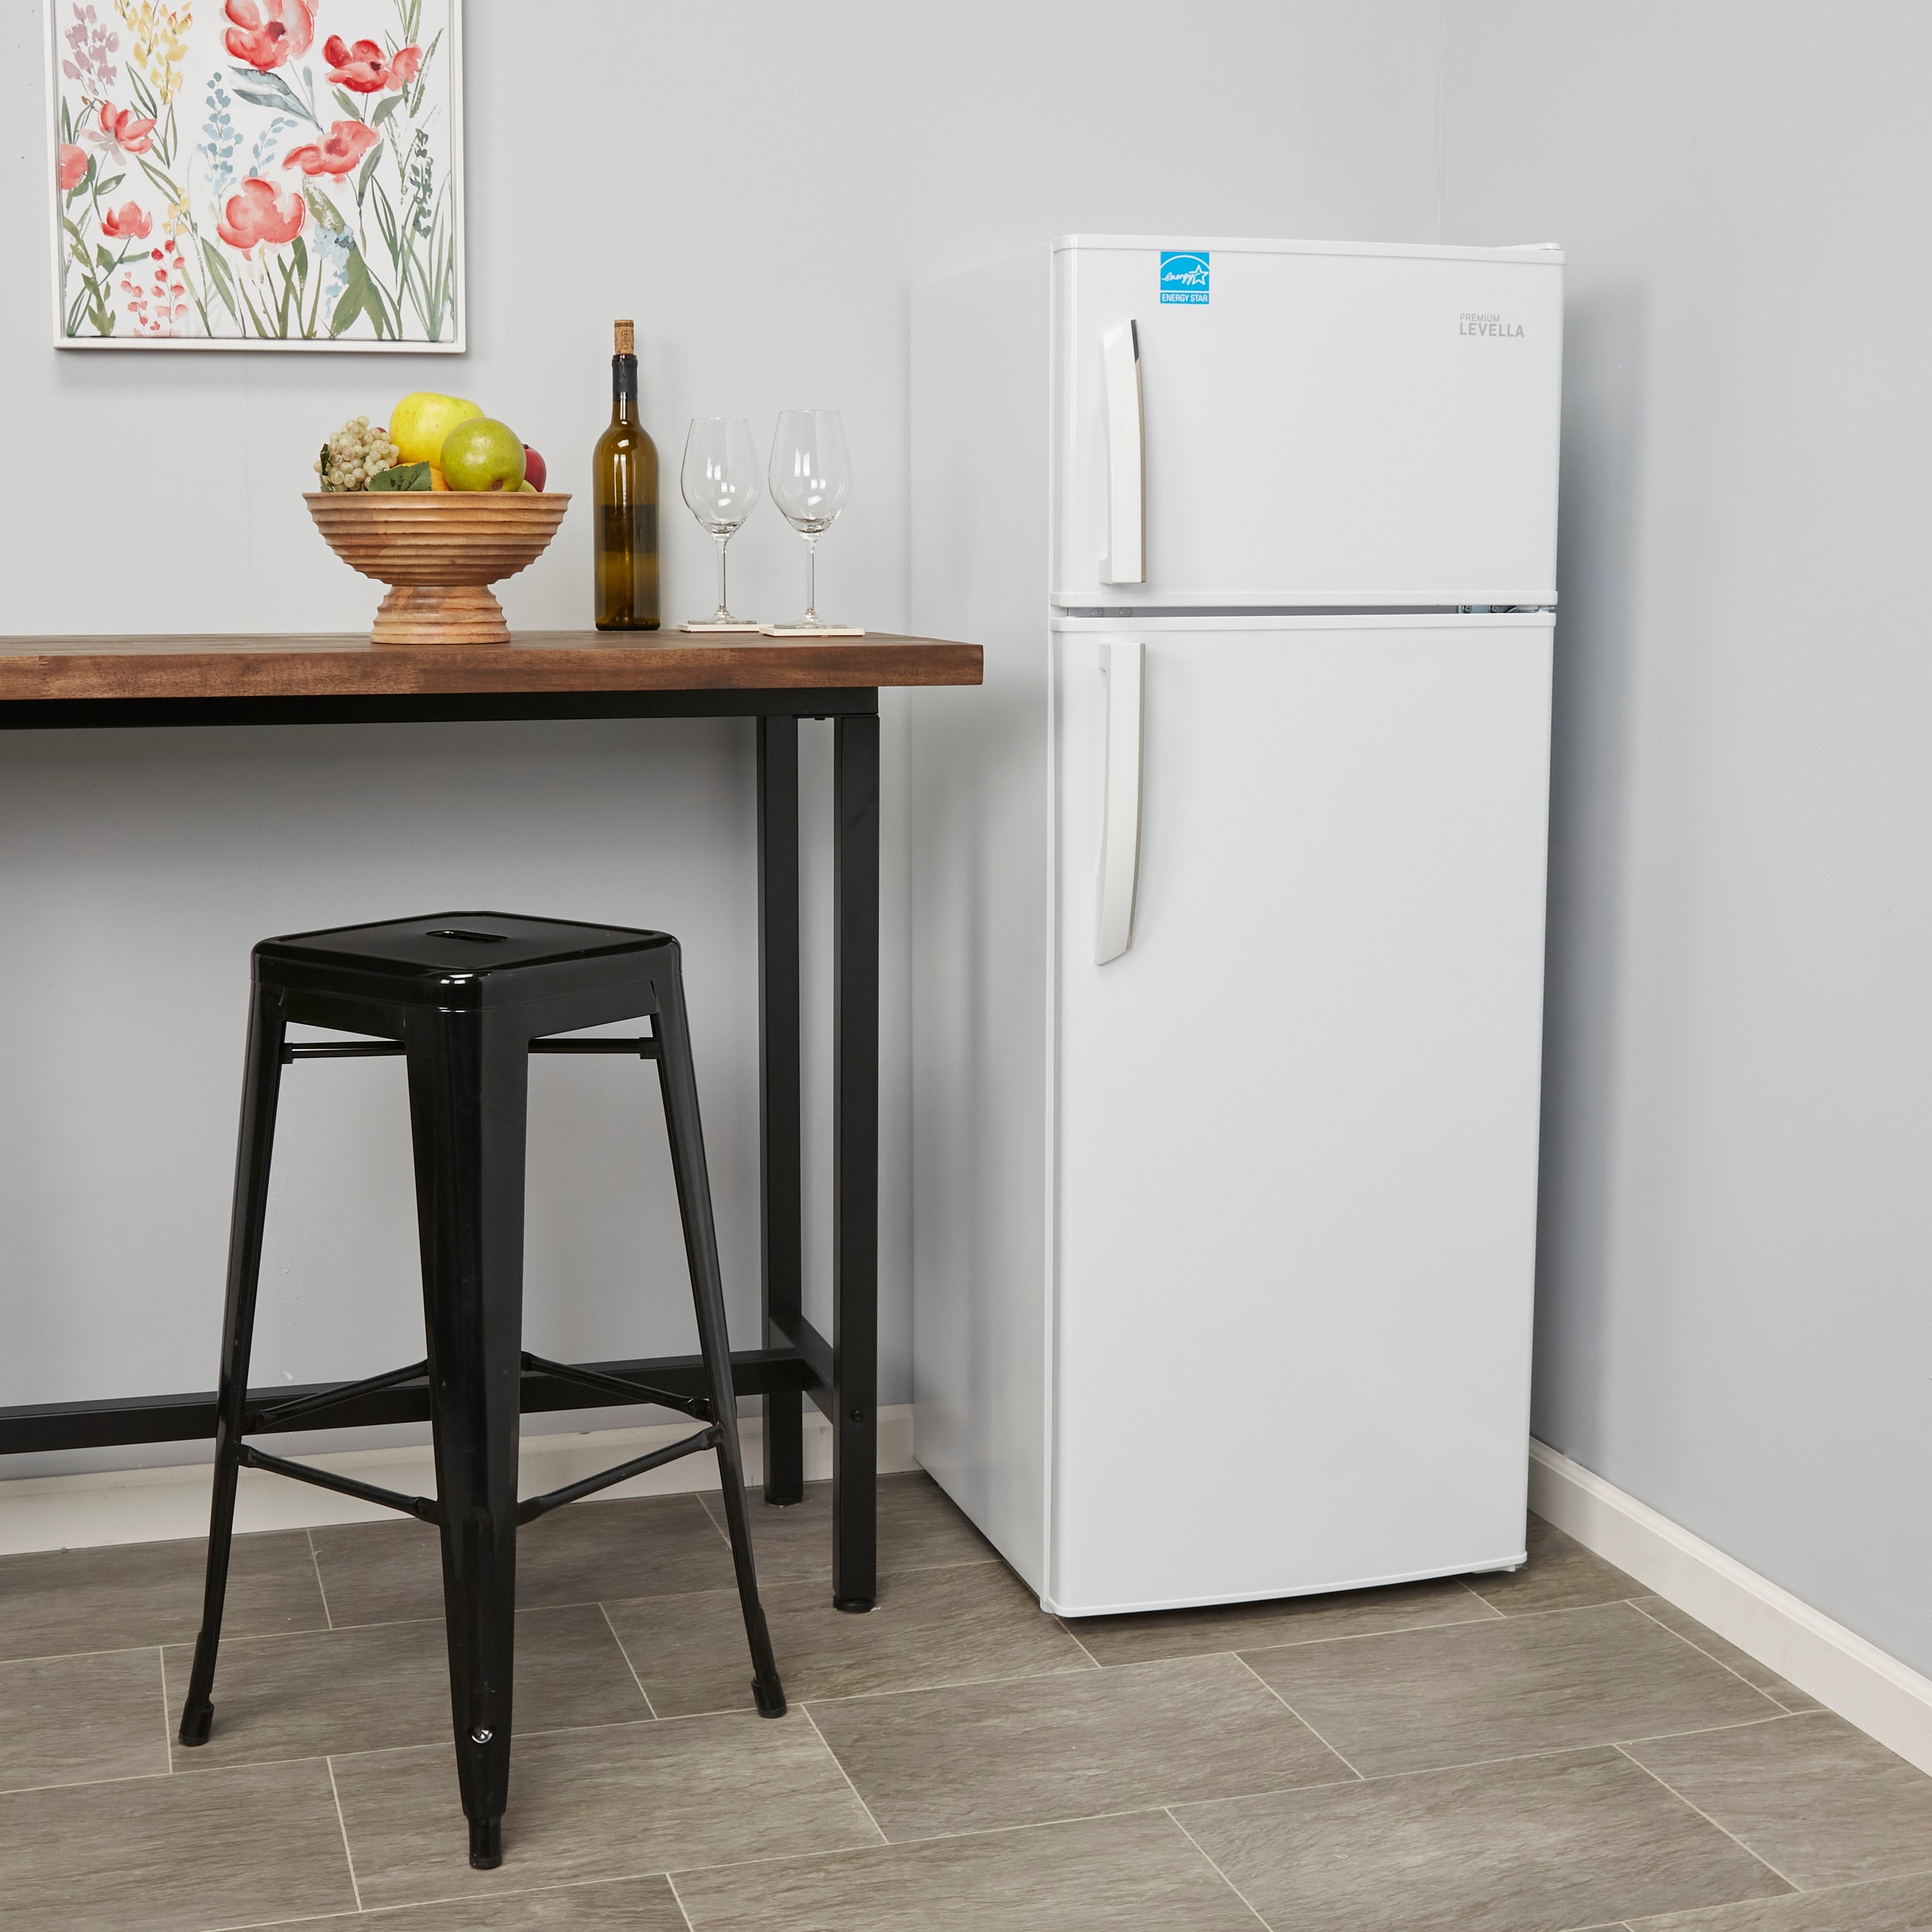 Frigidaire 7.5-cu ft Counter-depth Top-Freezer Refrigerator (Mint)